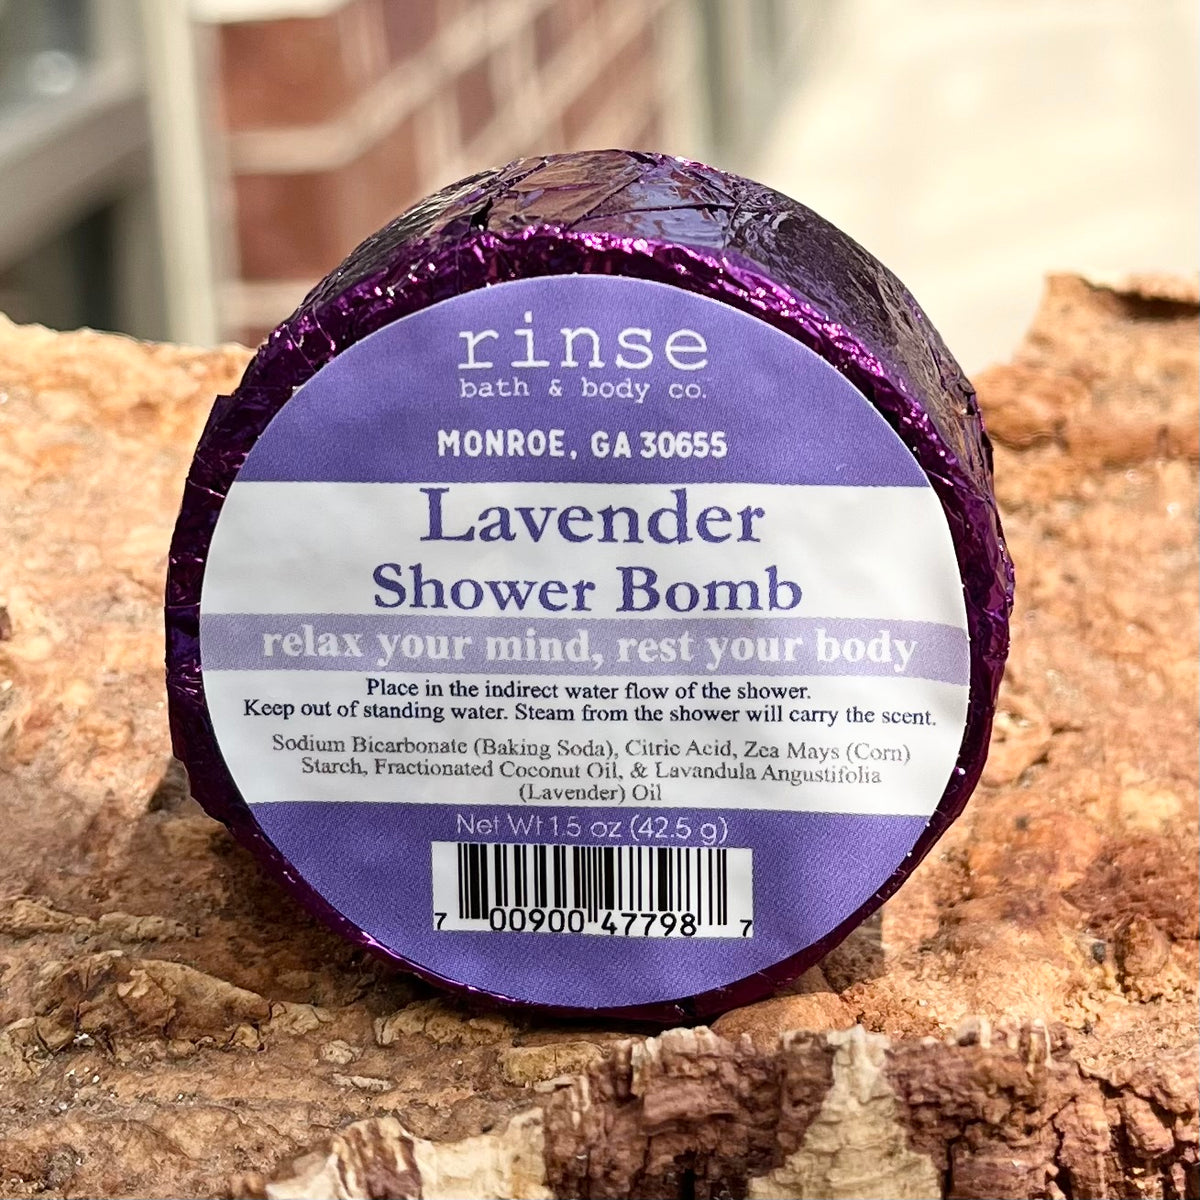 Lavender shower bomb in shiny purple wrapper